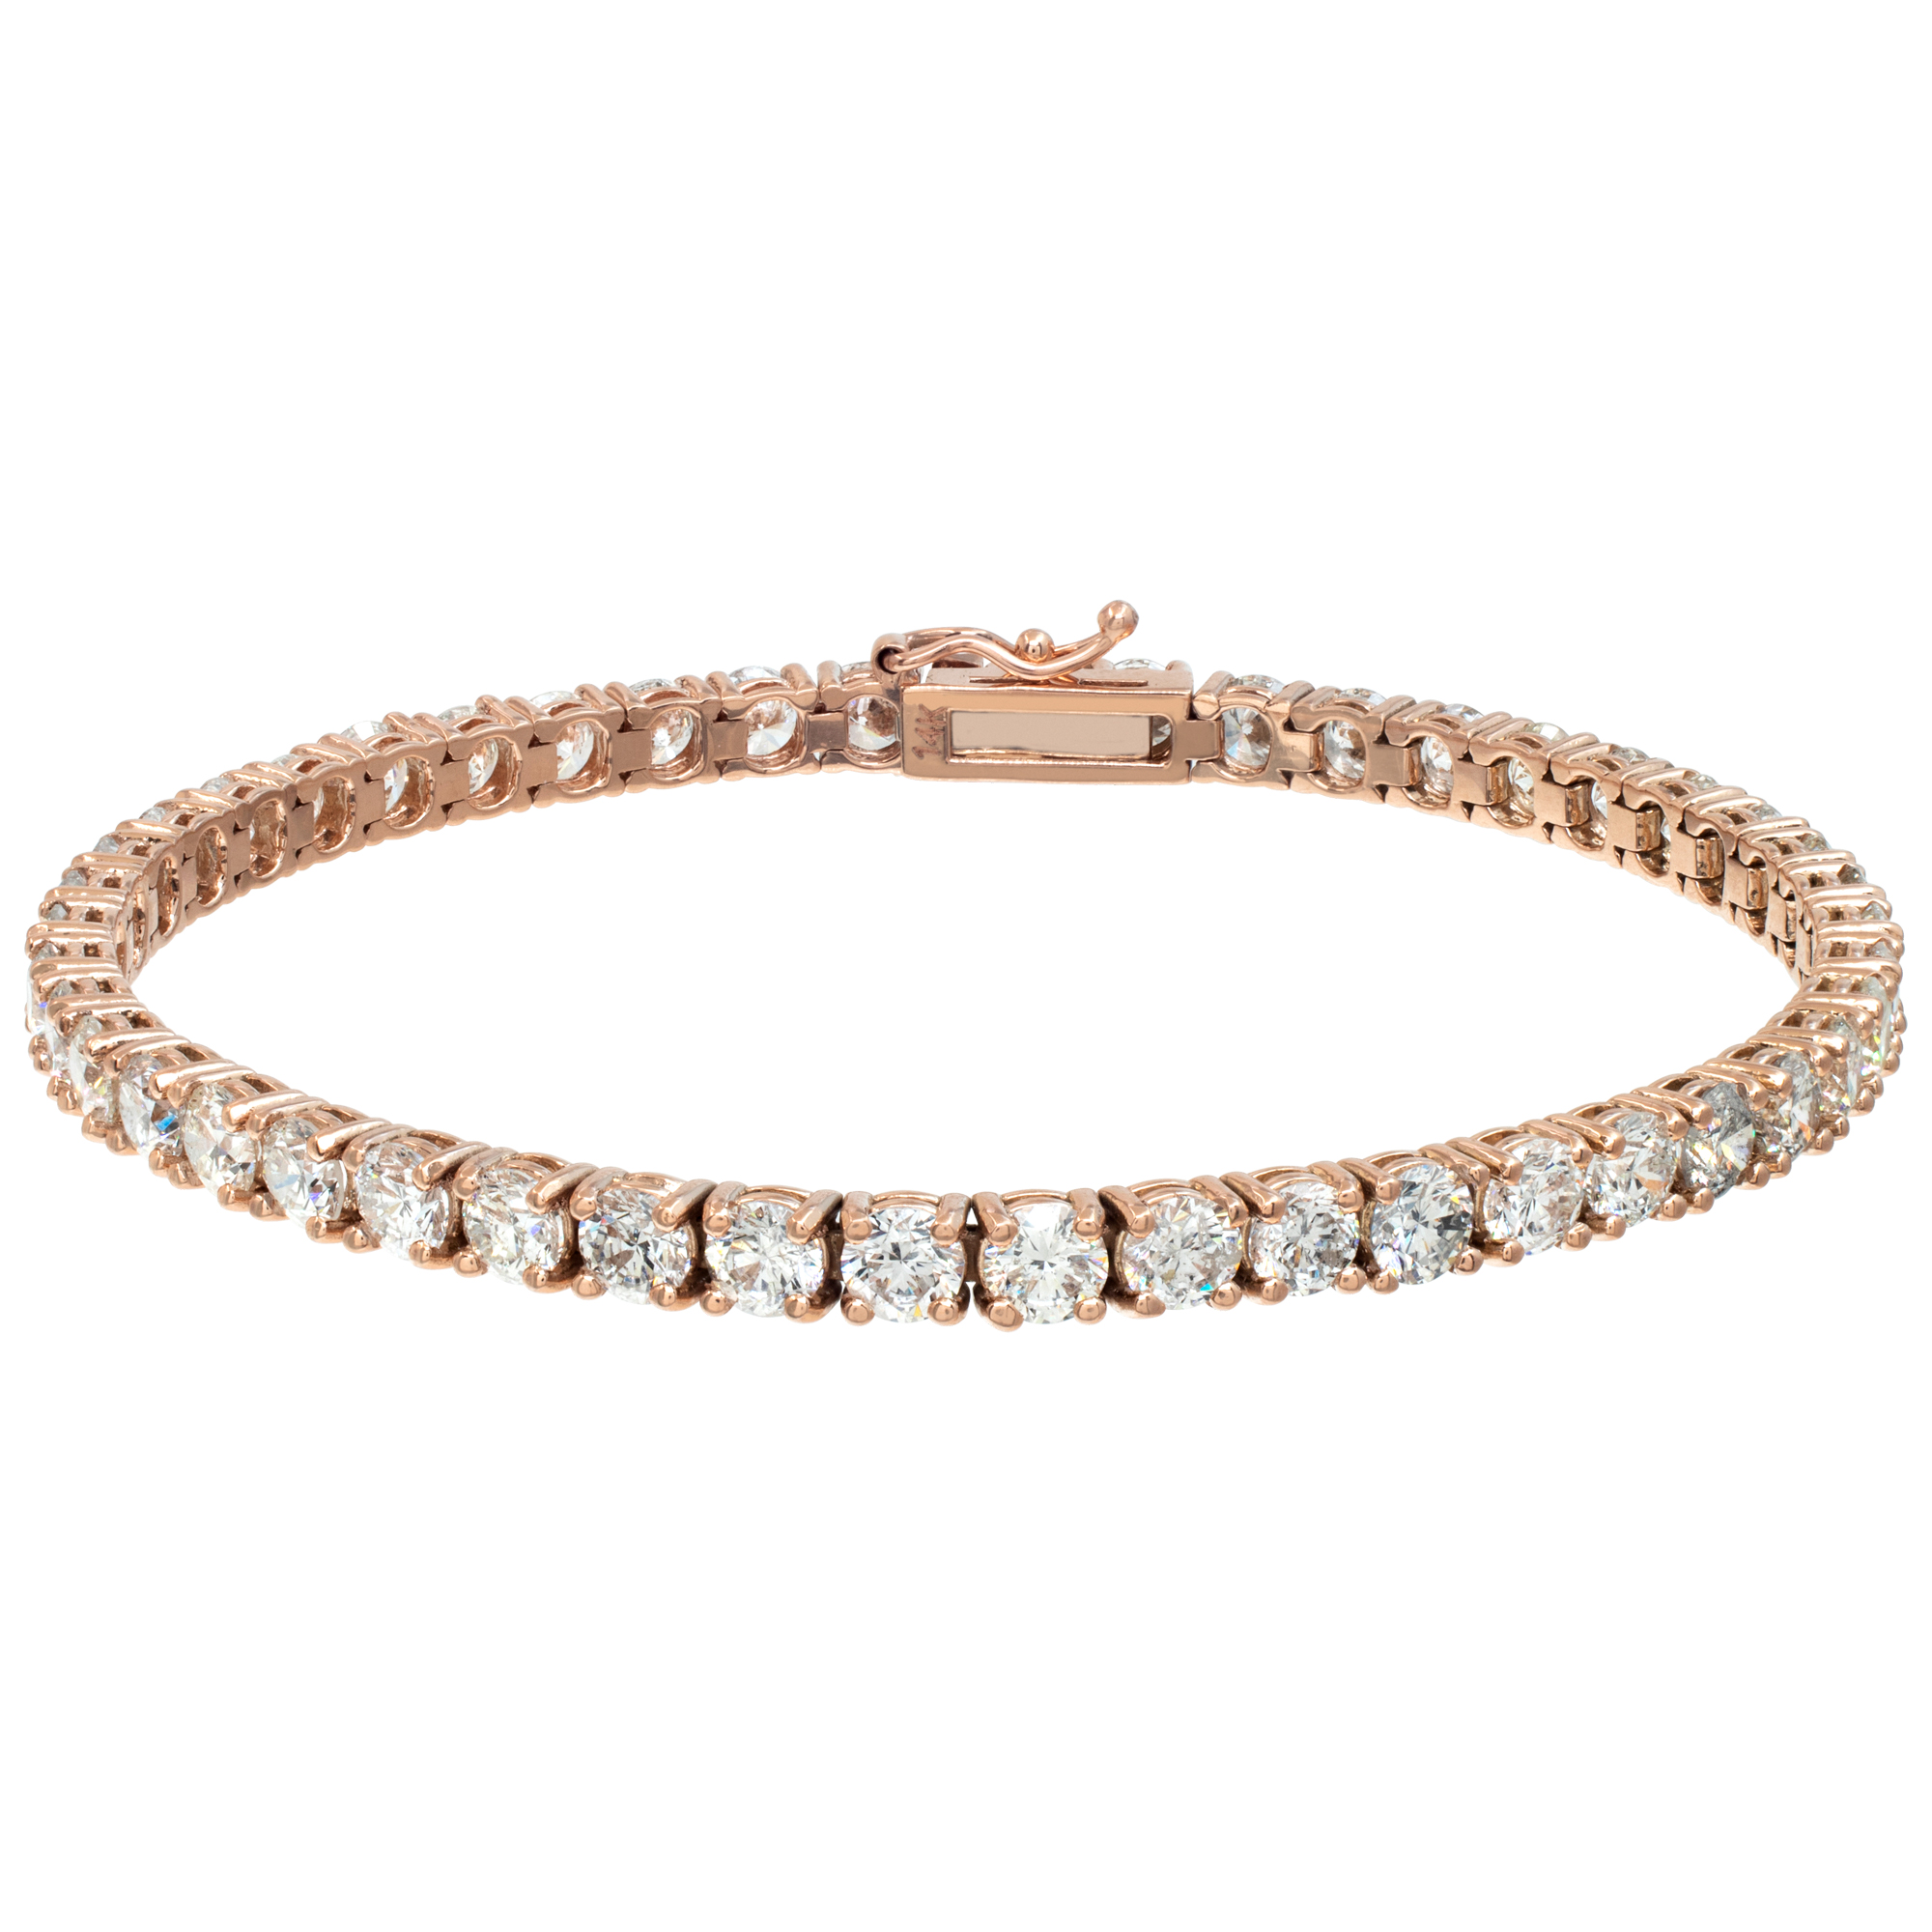 Diamond line bracelet in 14k rose gold with approximately 7.93 carats